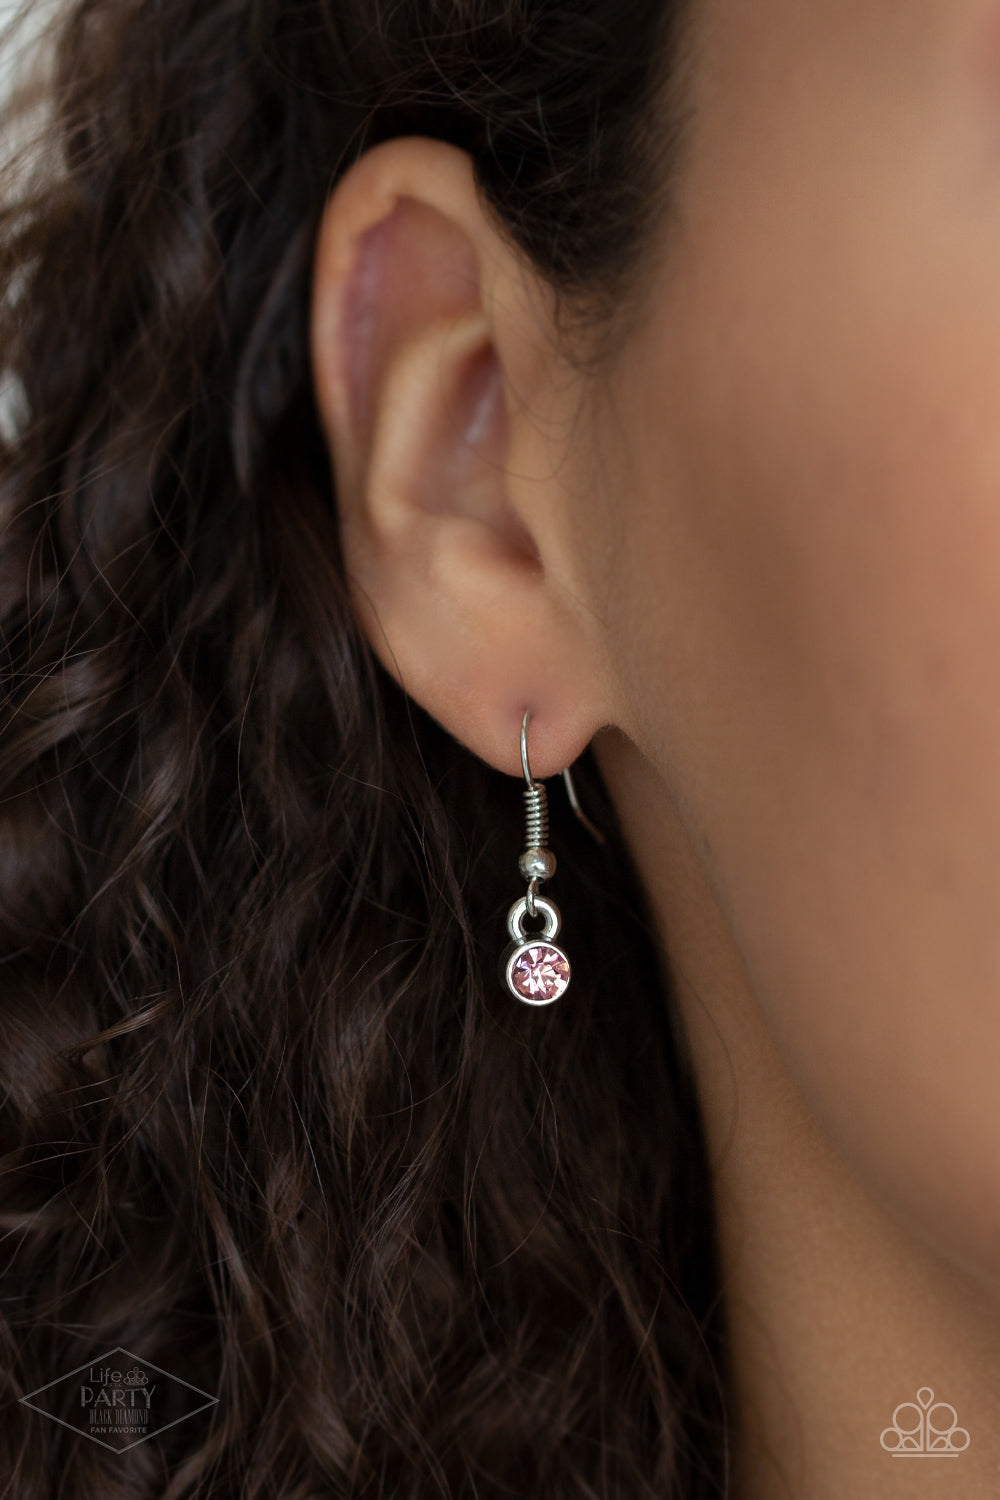 Paparazzi Flirtatiously Flashy - Pink Necklace - A Finishing Touch Jewelry